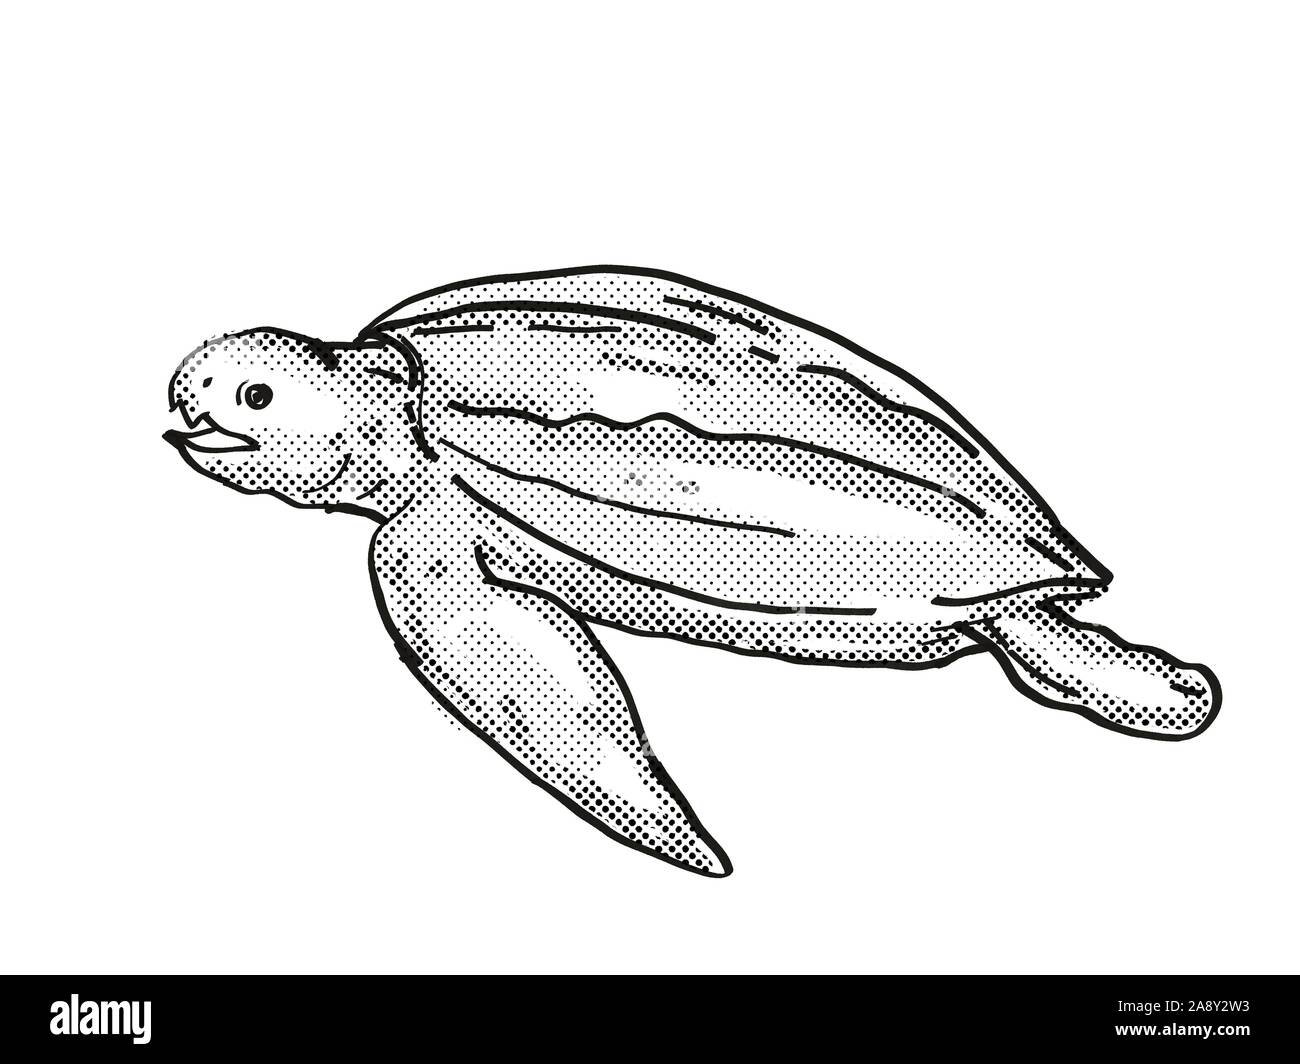 leatherback sea turtle drawing 2